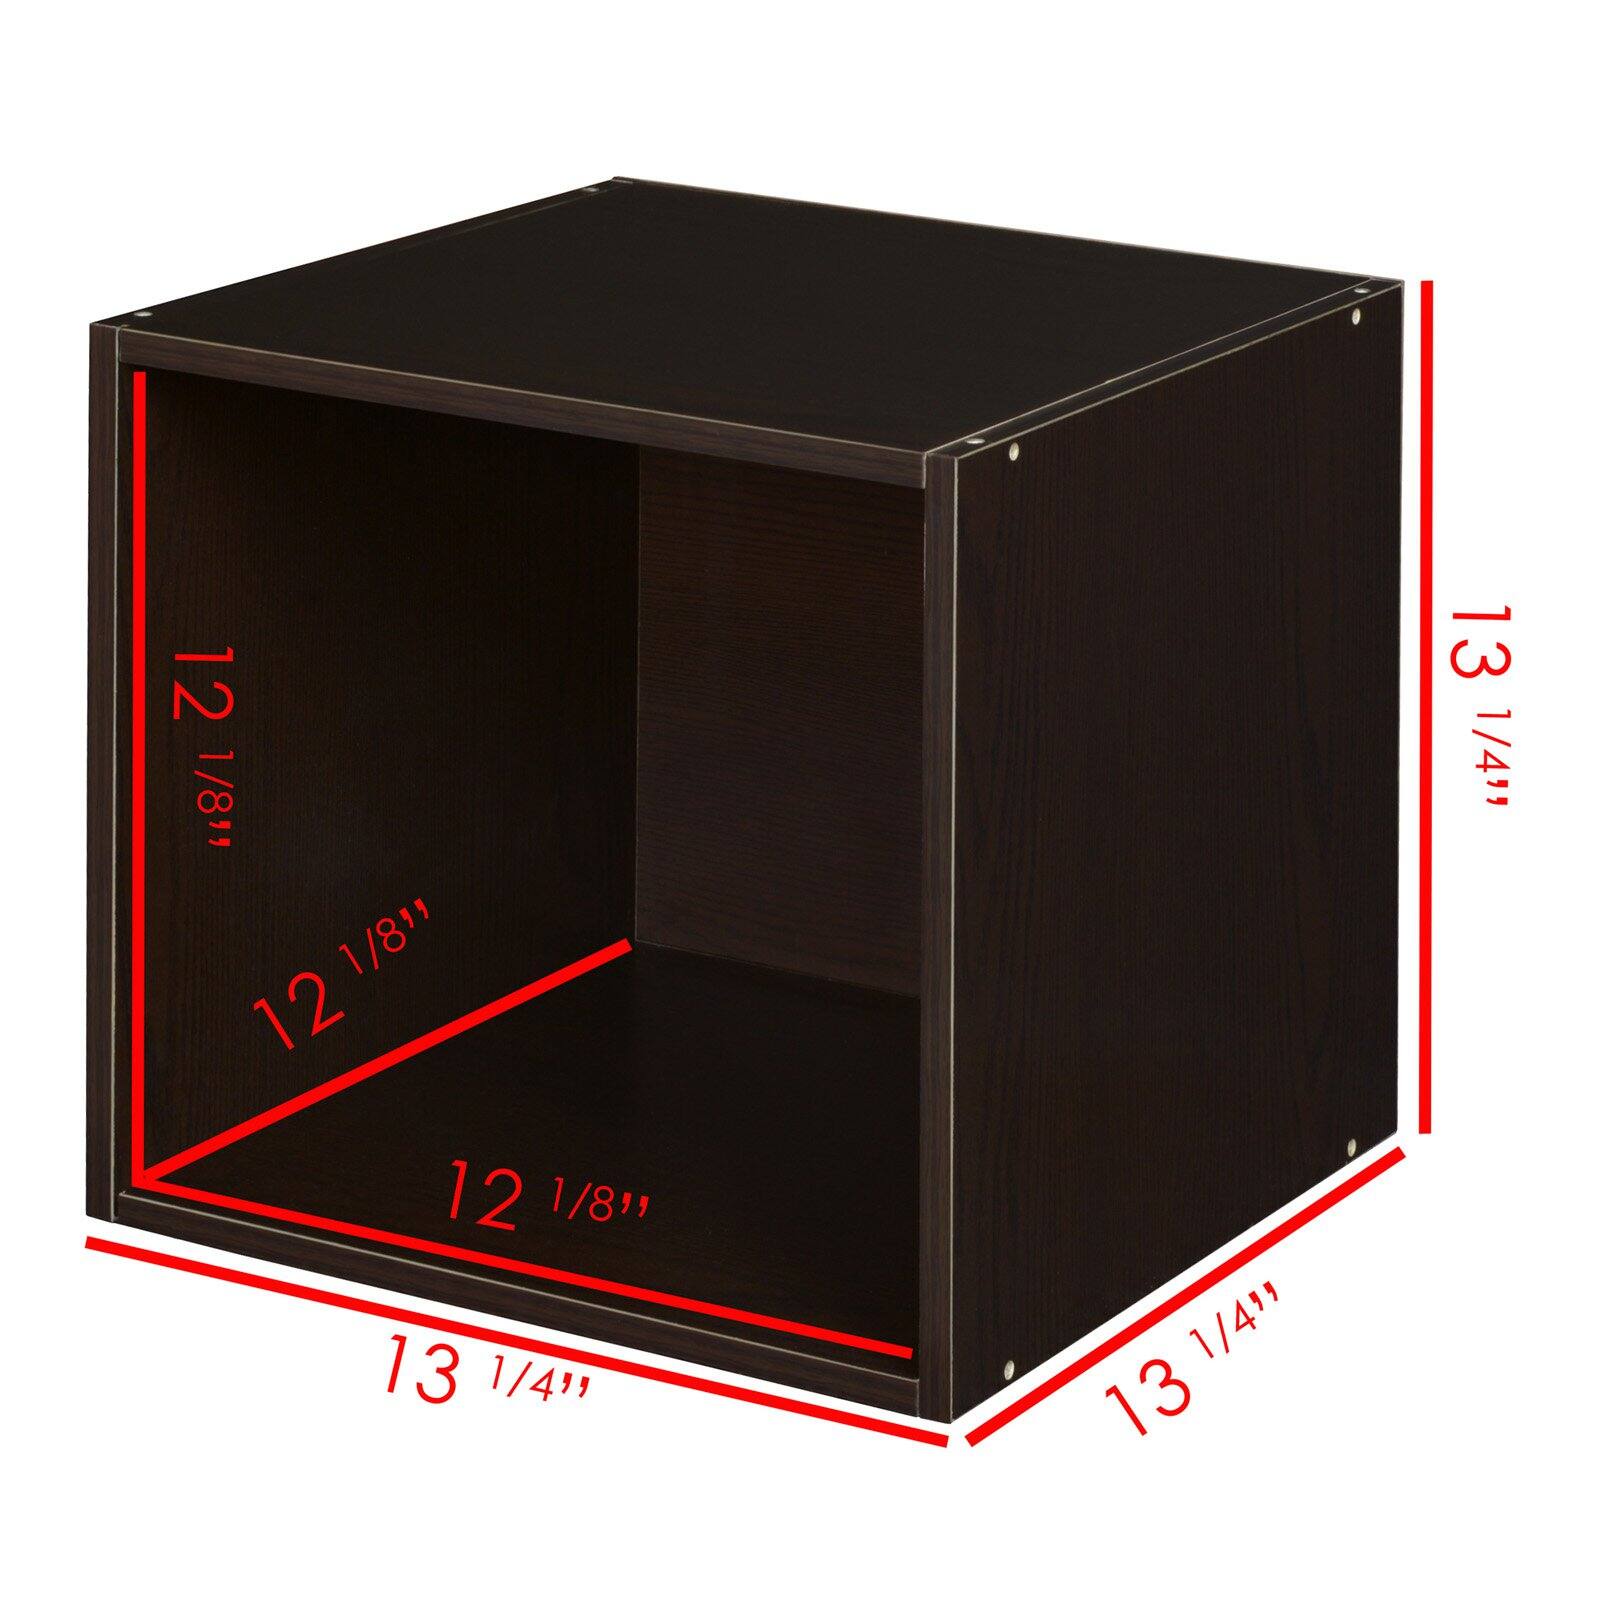 Regency Niche Cubo Modular Storage Shelf with Optional 4 Full and 2 Half Sized Folding Storage Bins - image 5 of 10